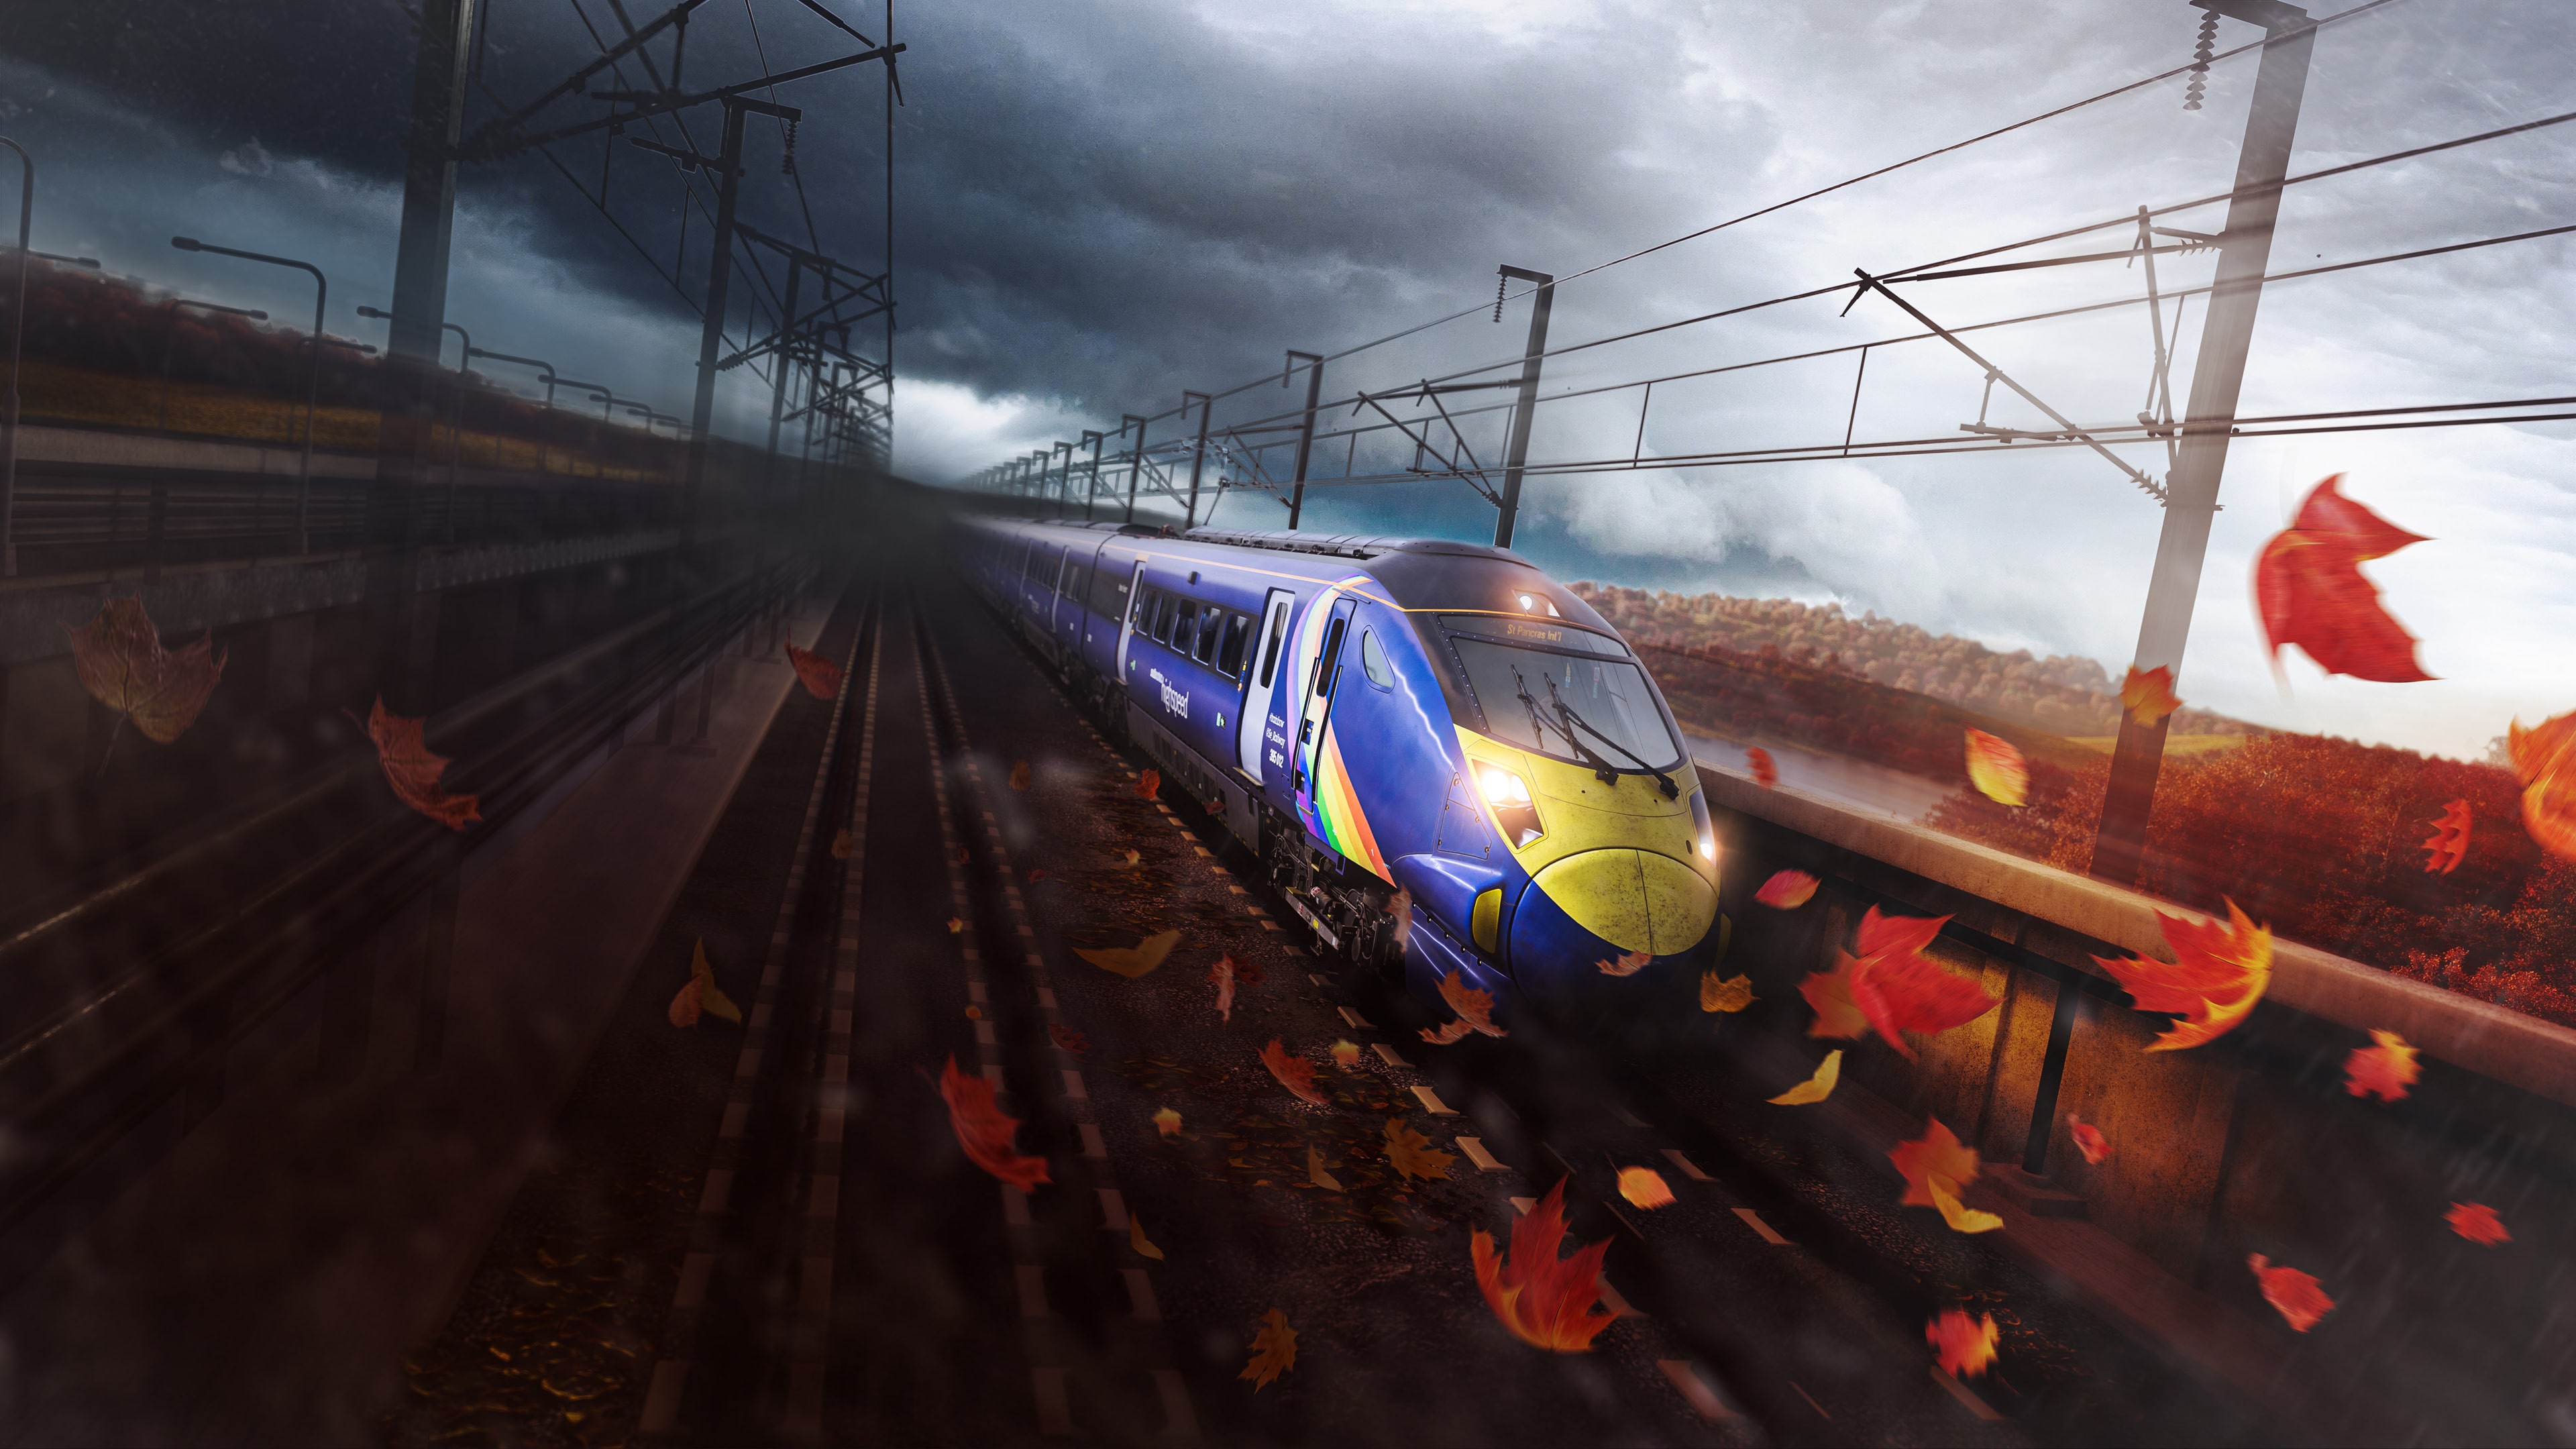 Train Sim World® 3: UK Starter Pack PS4 & PS5